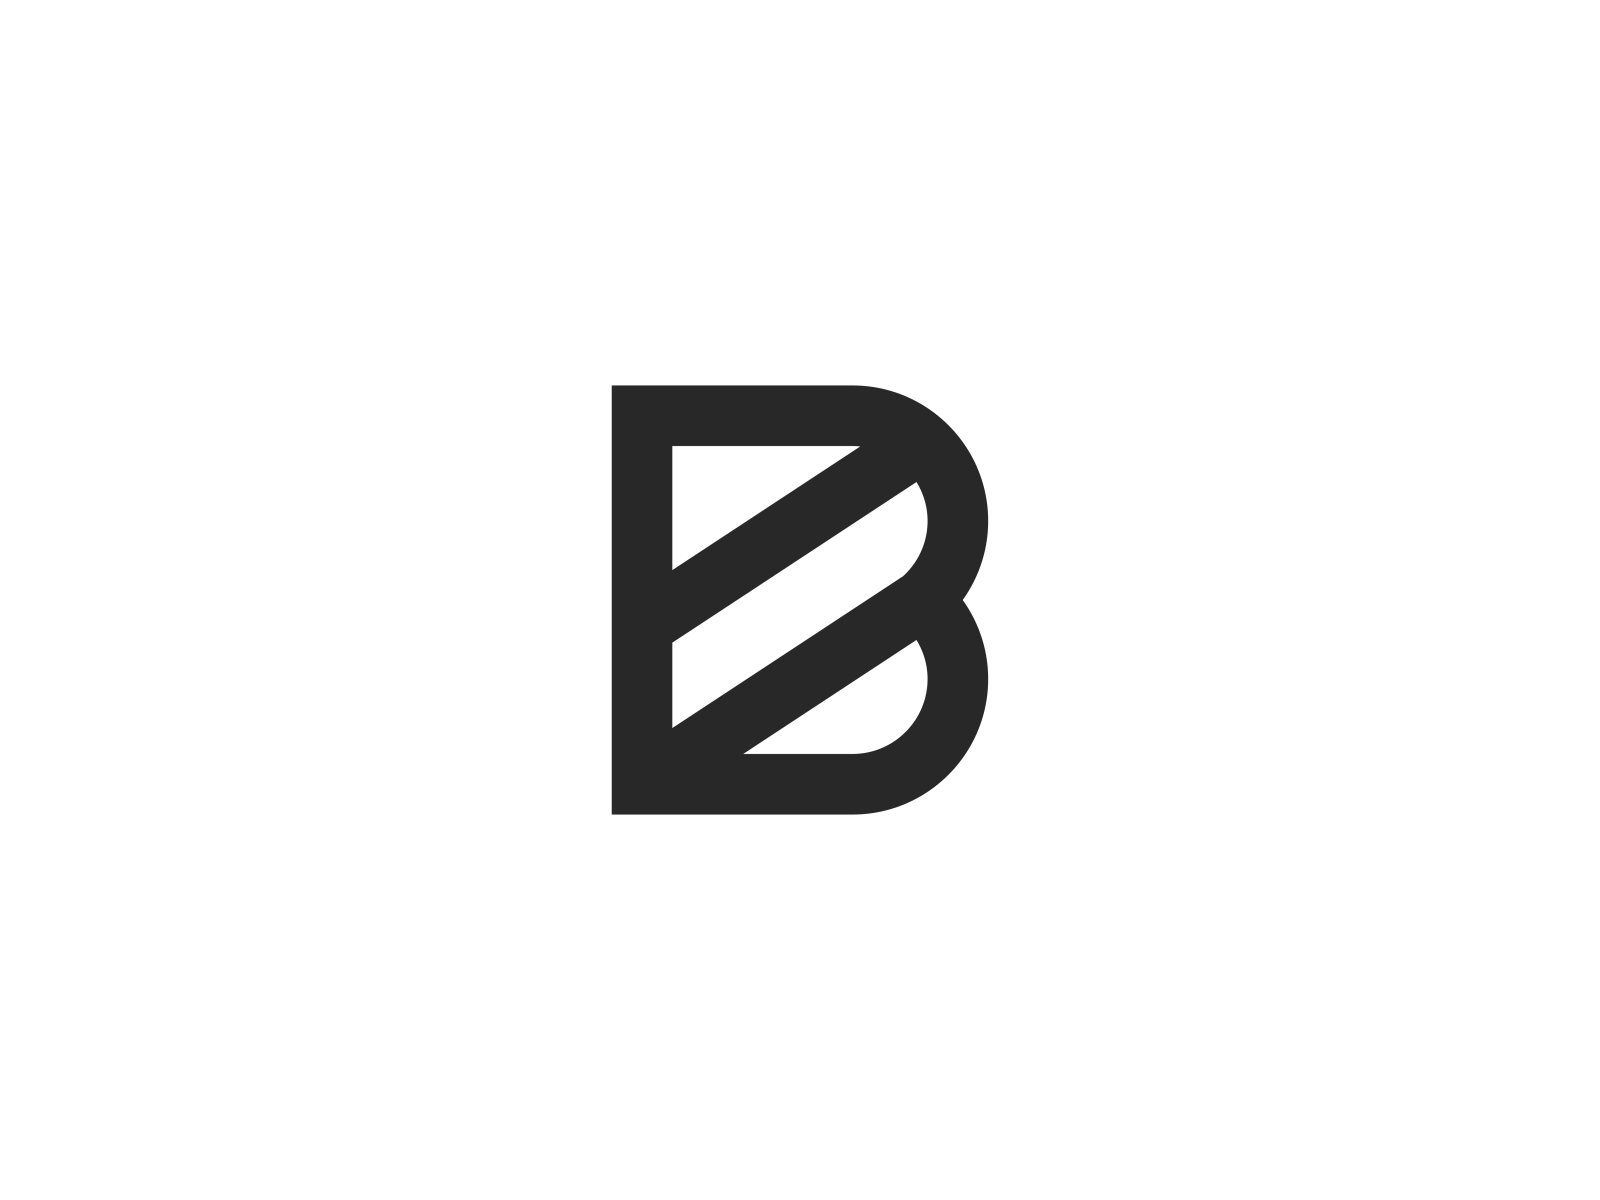 B2 Letter Logo Design on Black Background.B2 Creative Initials Letter Logo  Concept Stock Vector - Illustration of background, fashion: 221105802